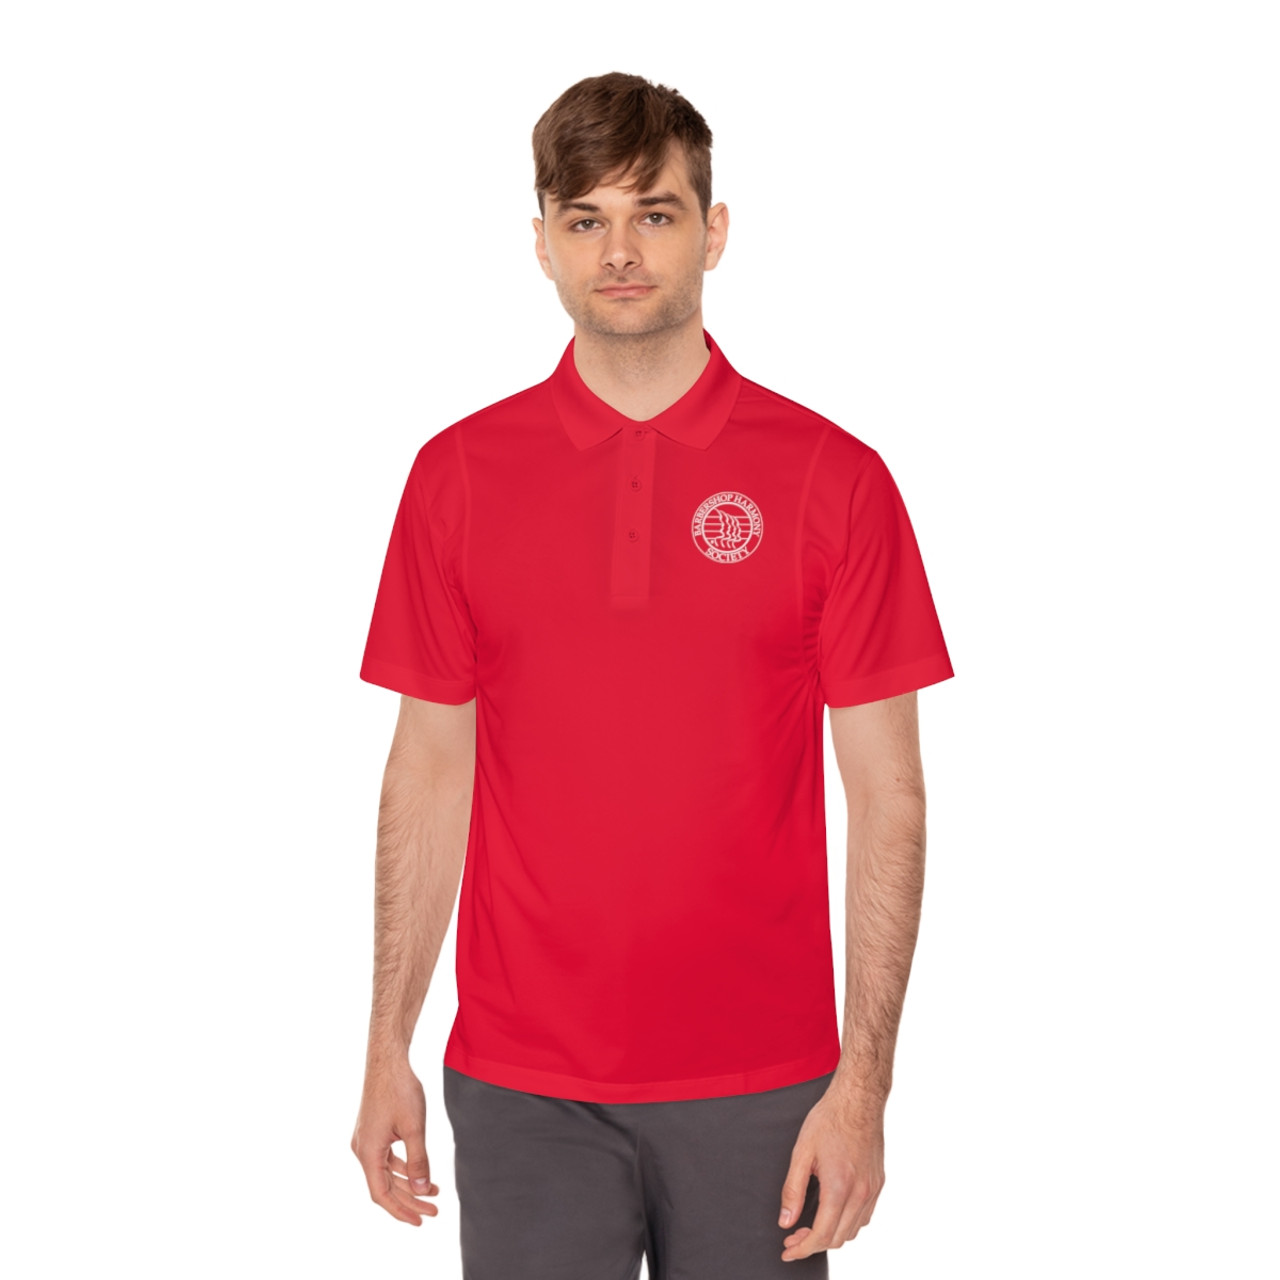 Men's Sport Polo Screen Printed Shirt- Multiple Colors